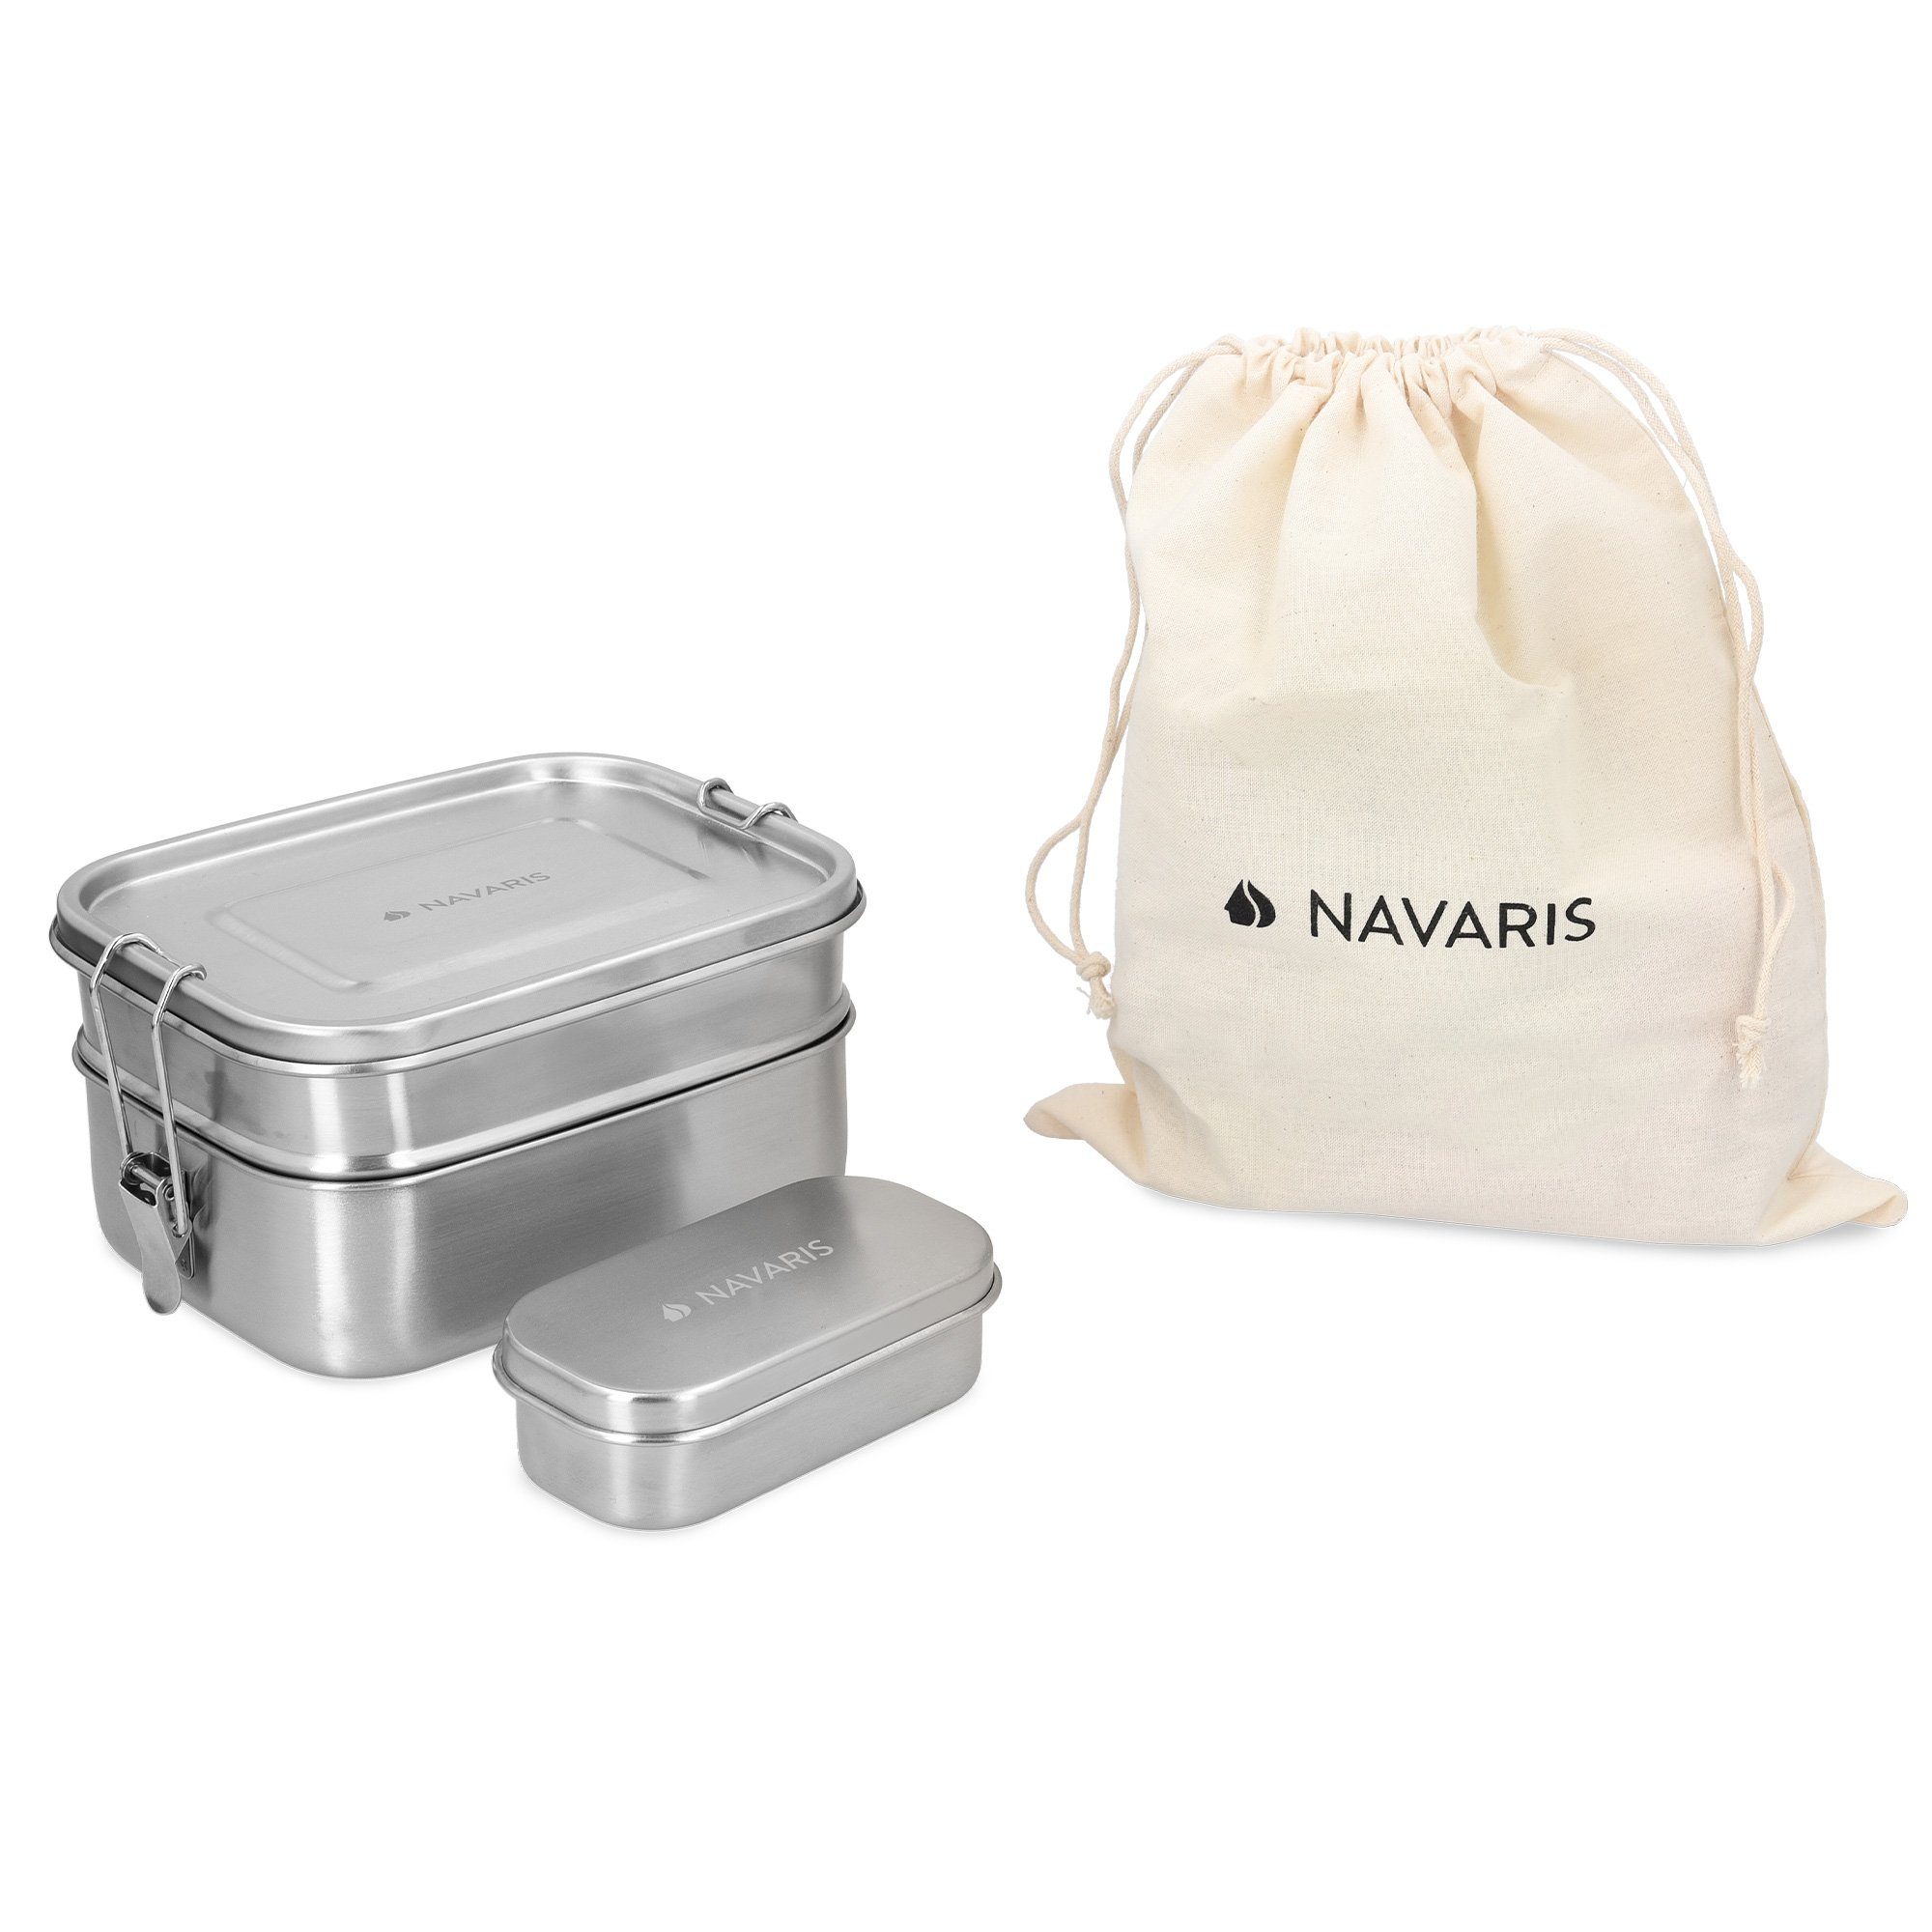 Edelstahl Mini Doppeldecker Set Brotdosen Navaris inkl. Lunchbox Edelstahl Behälter,